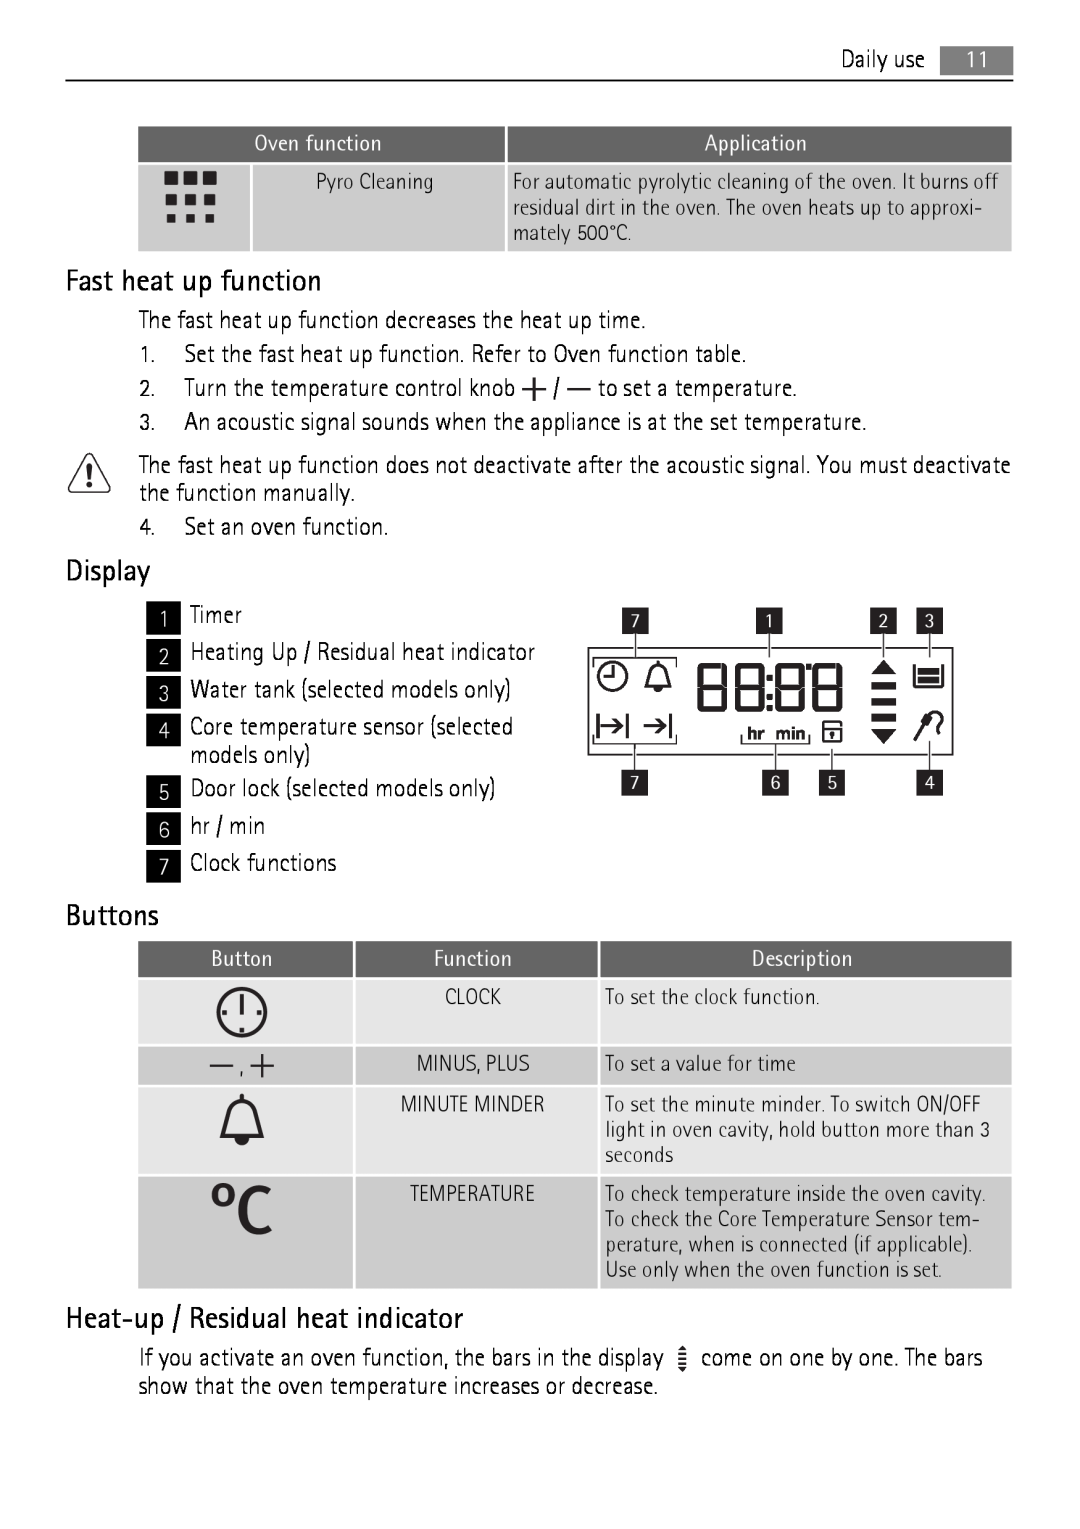 AEG BP5003001 user manual Fast heat up function, Display, Buttons, Heat-up /Residual heat indicator 